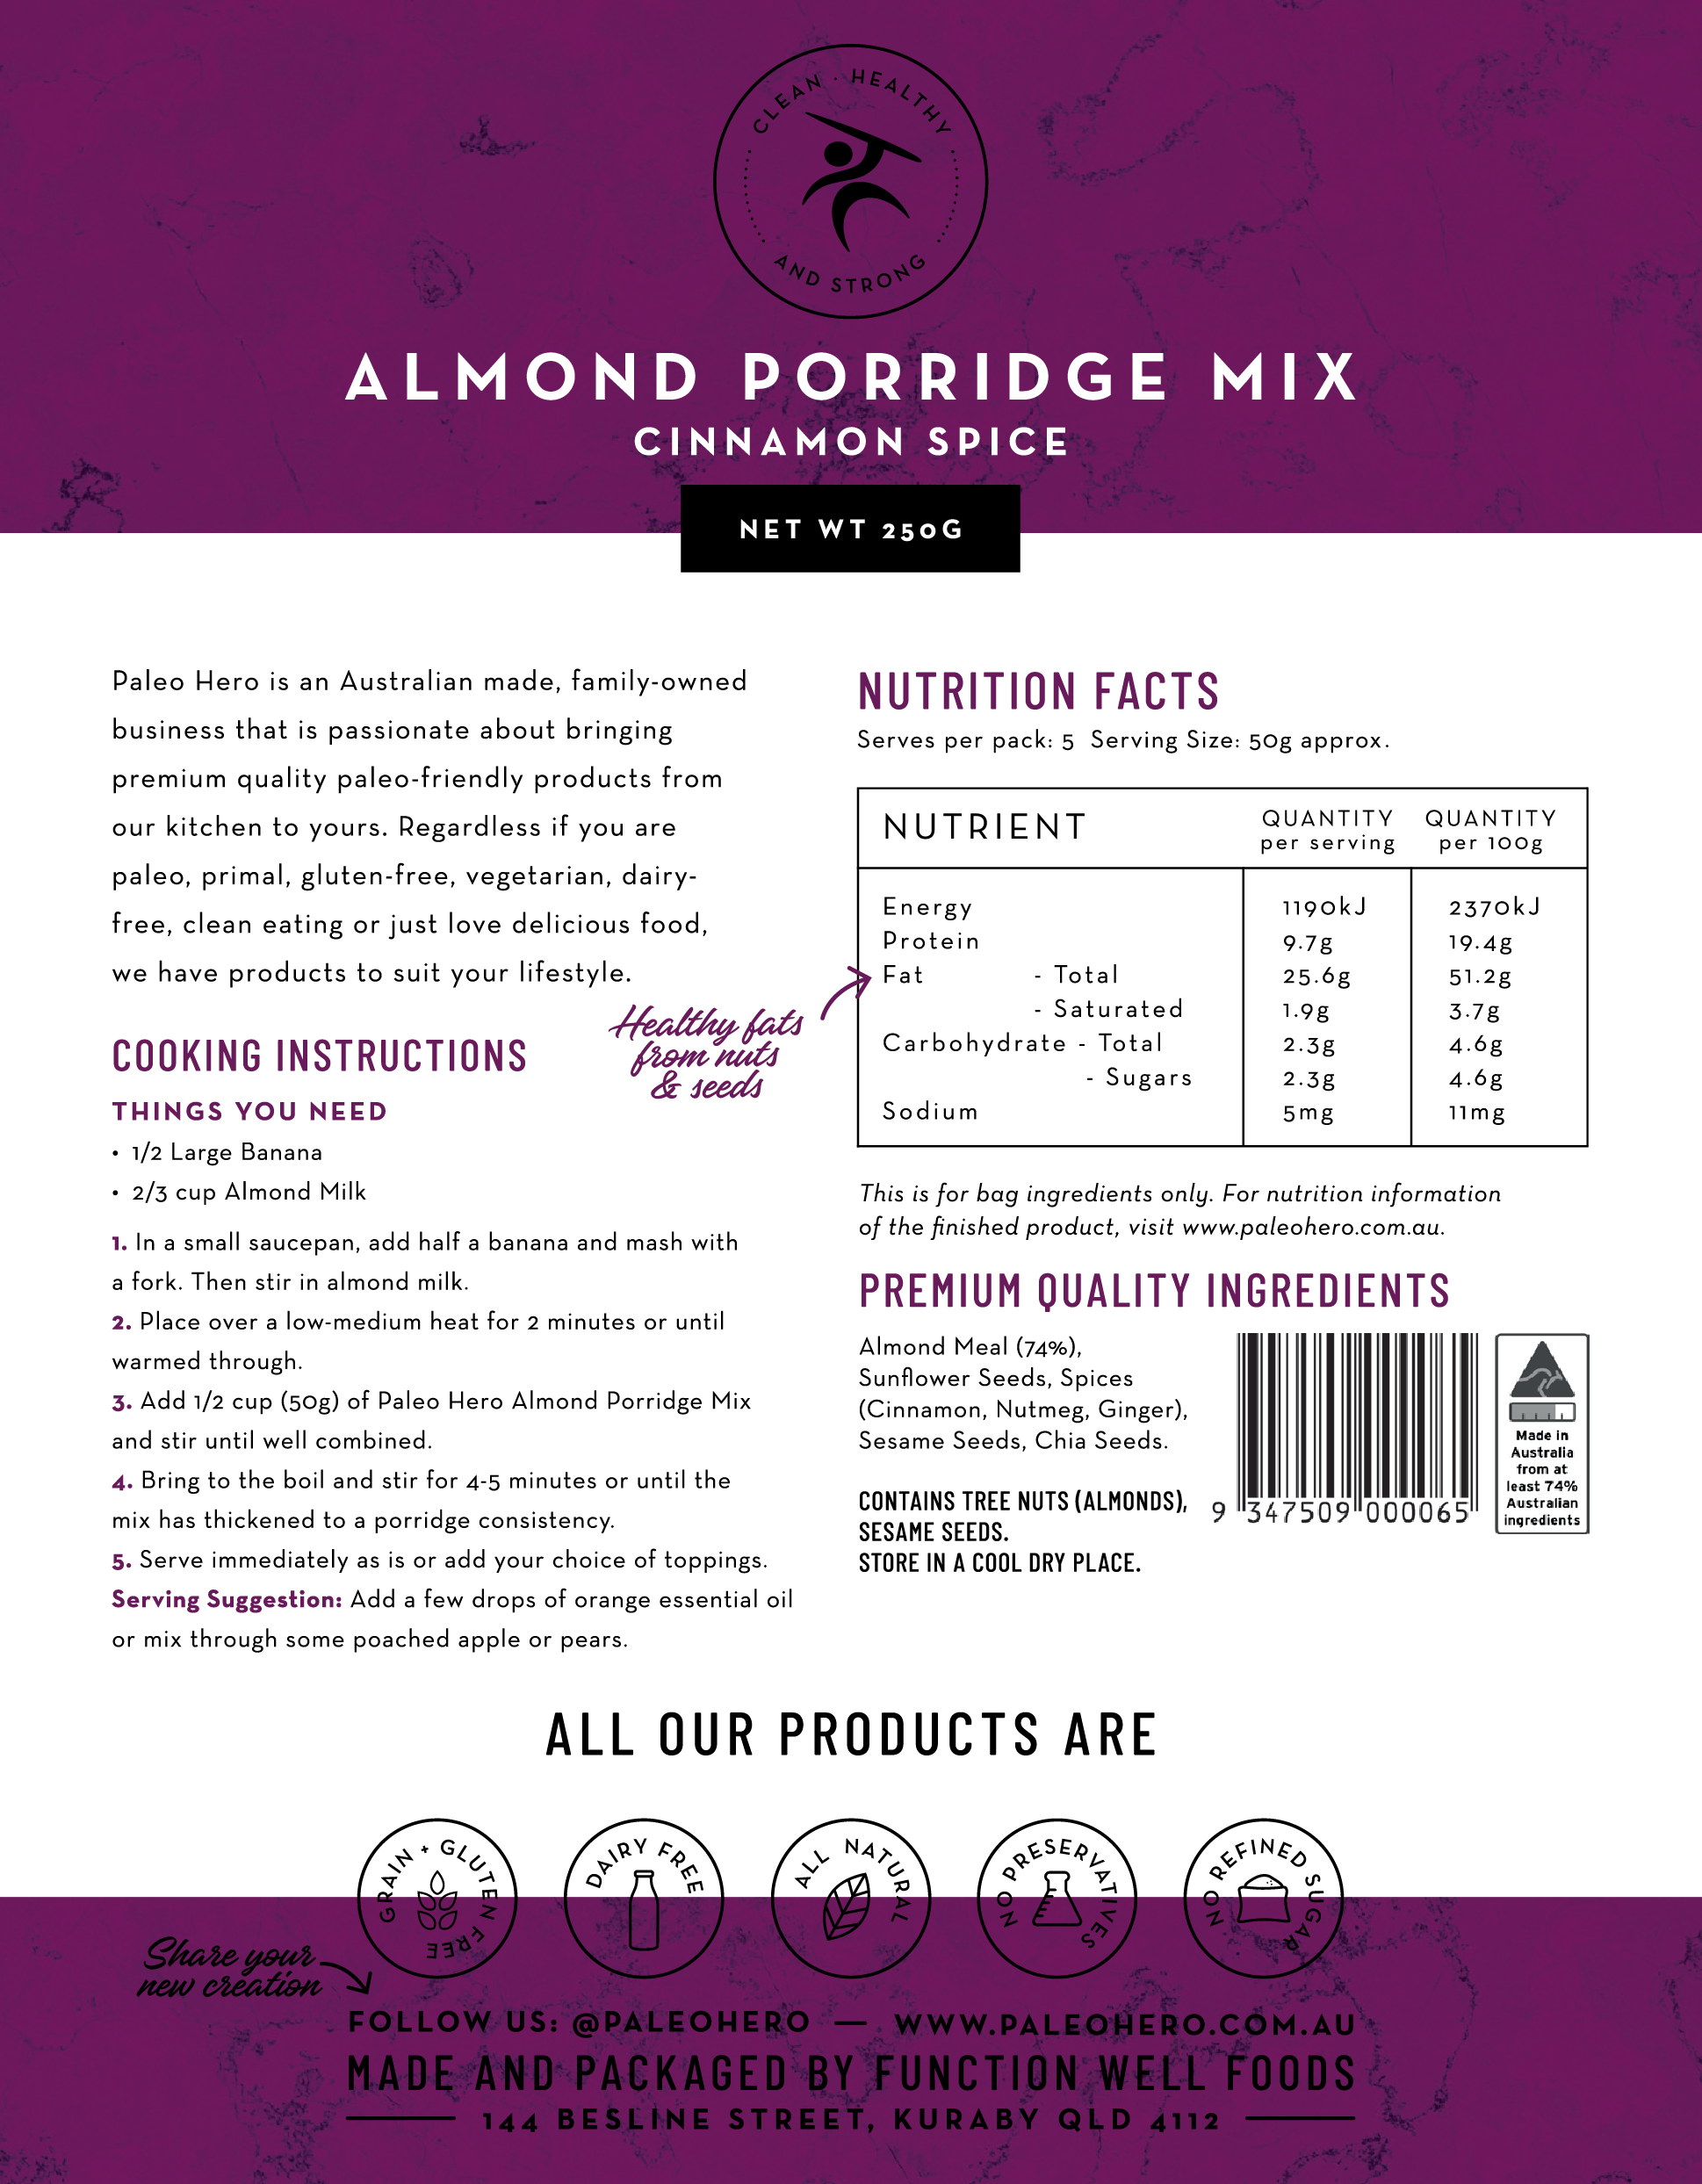 paleo hero primal almond porridge mix cinnamon spice 250g